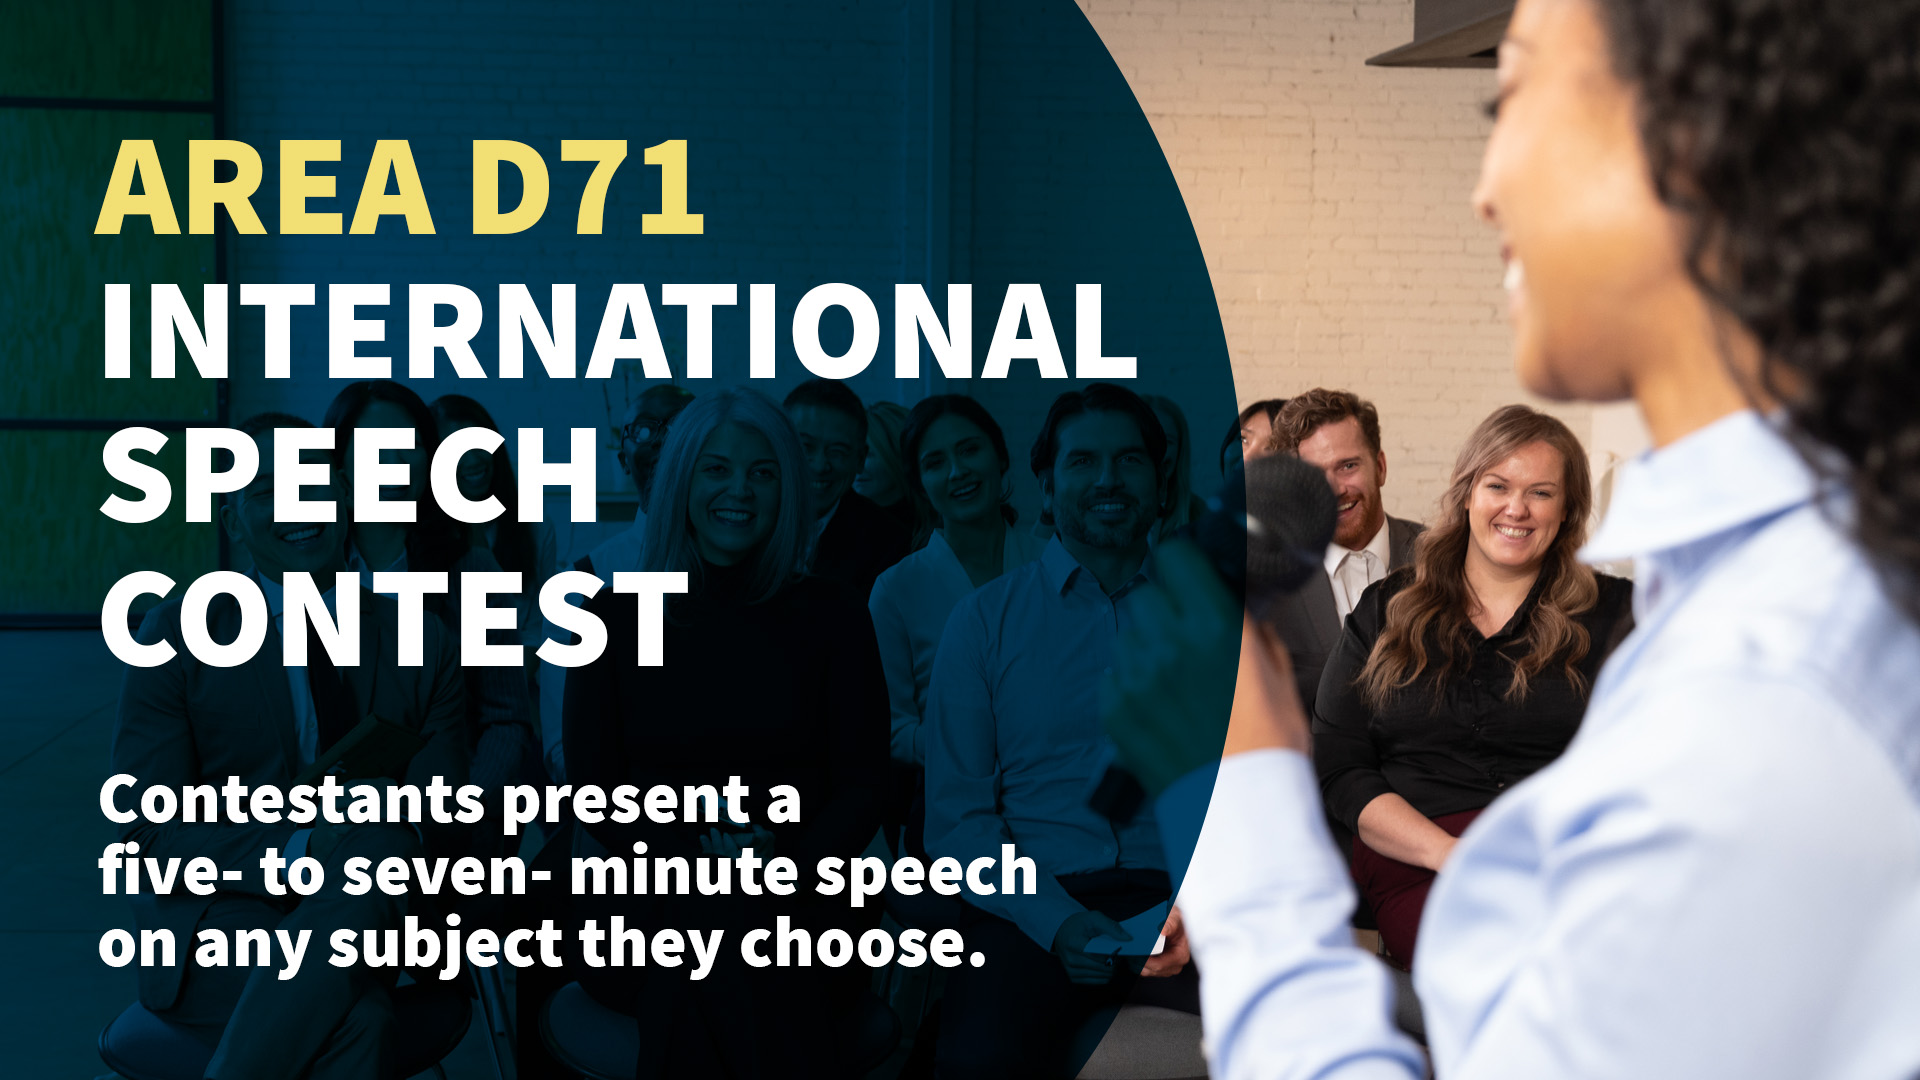 Area 71 International Speech Contest